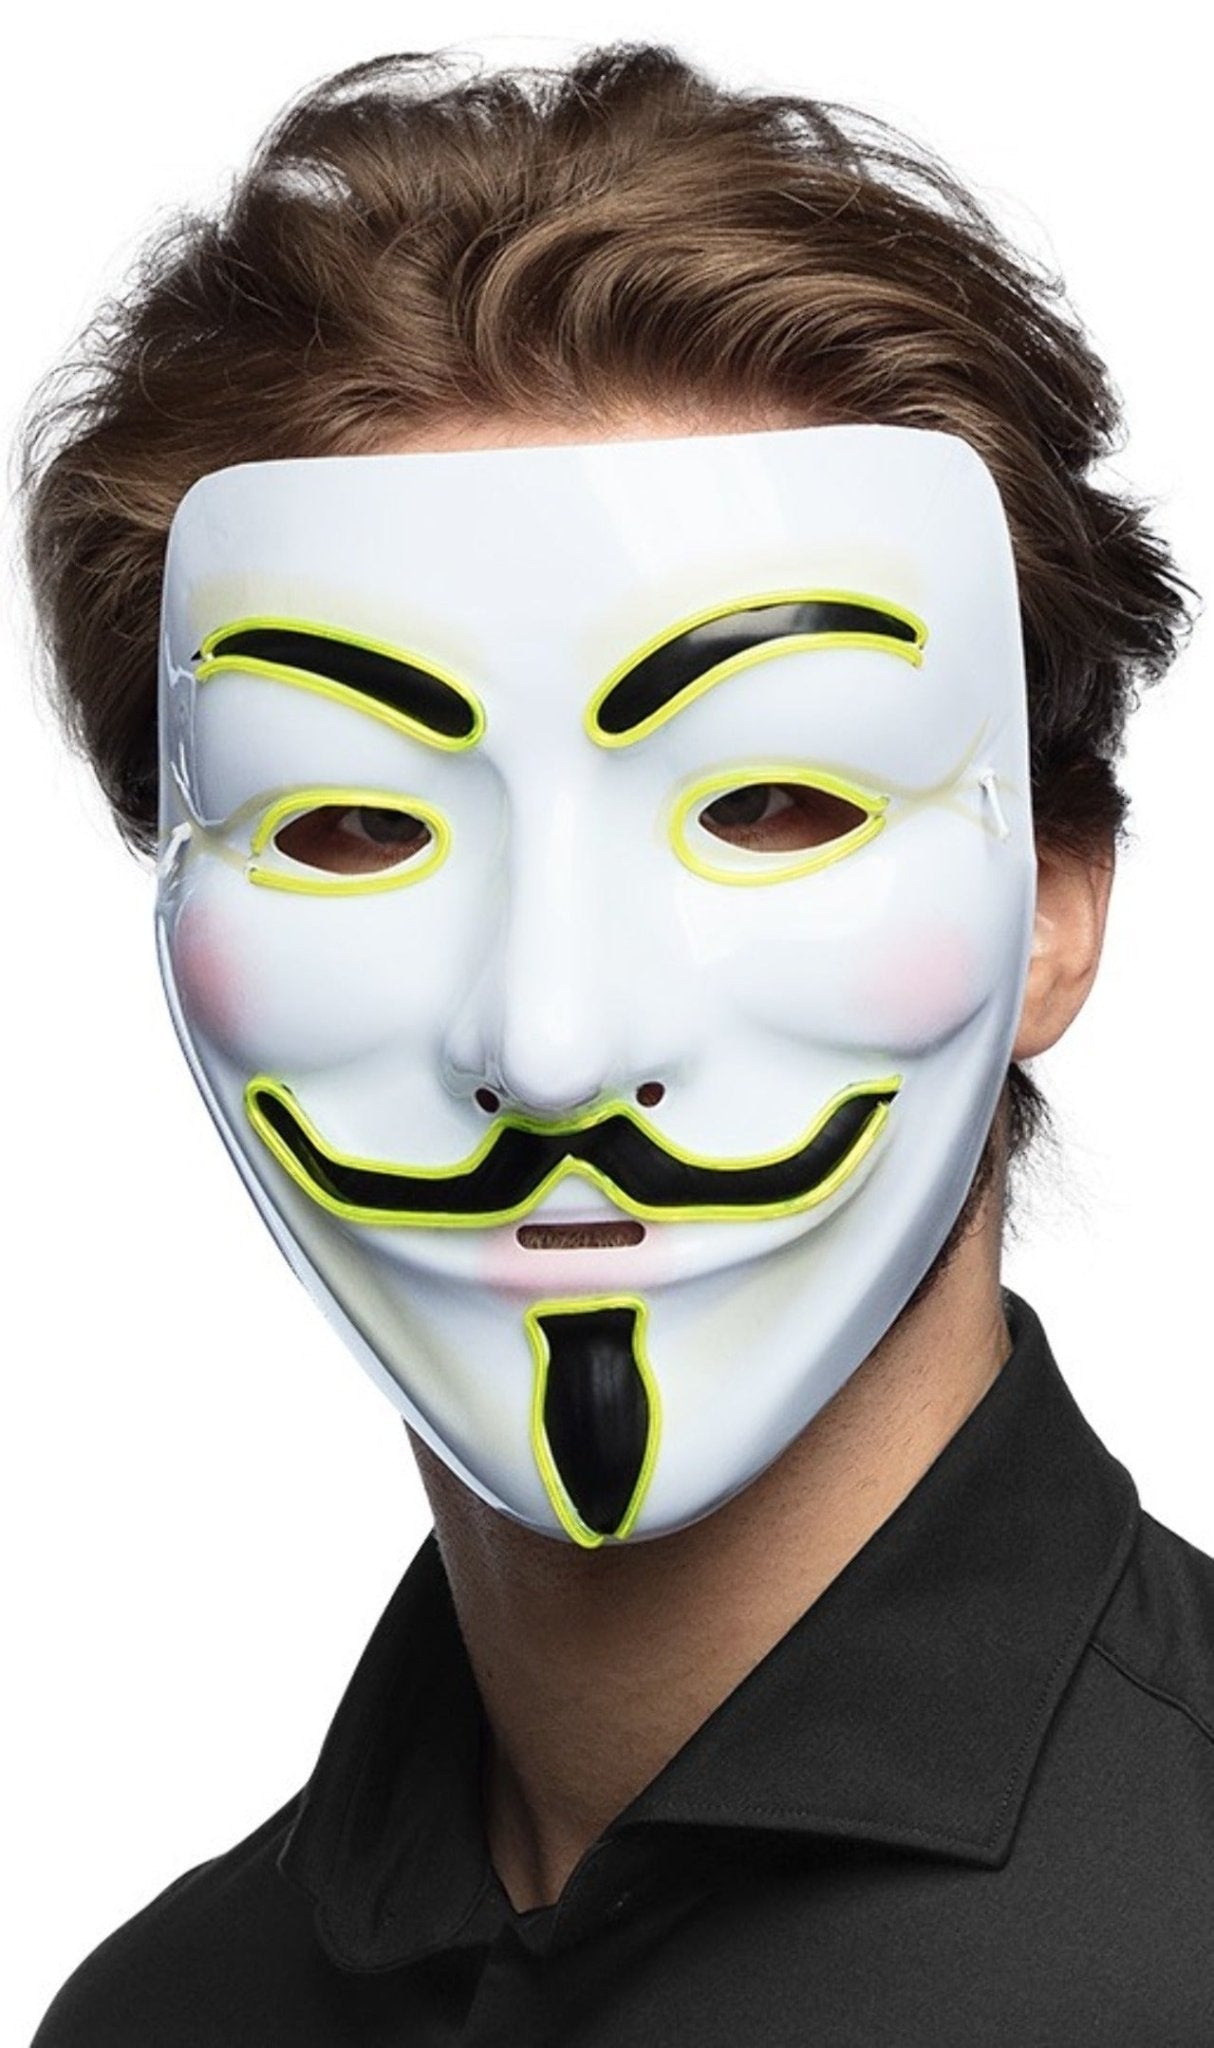 Acquista online la maschera LED V for Vendetta